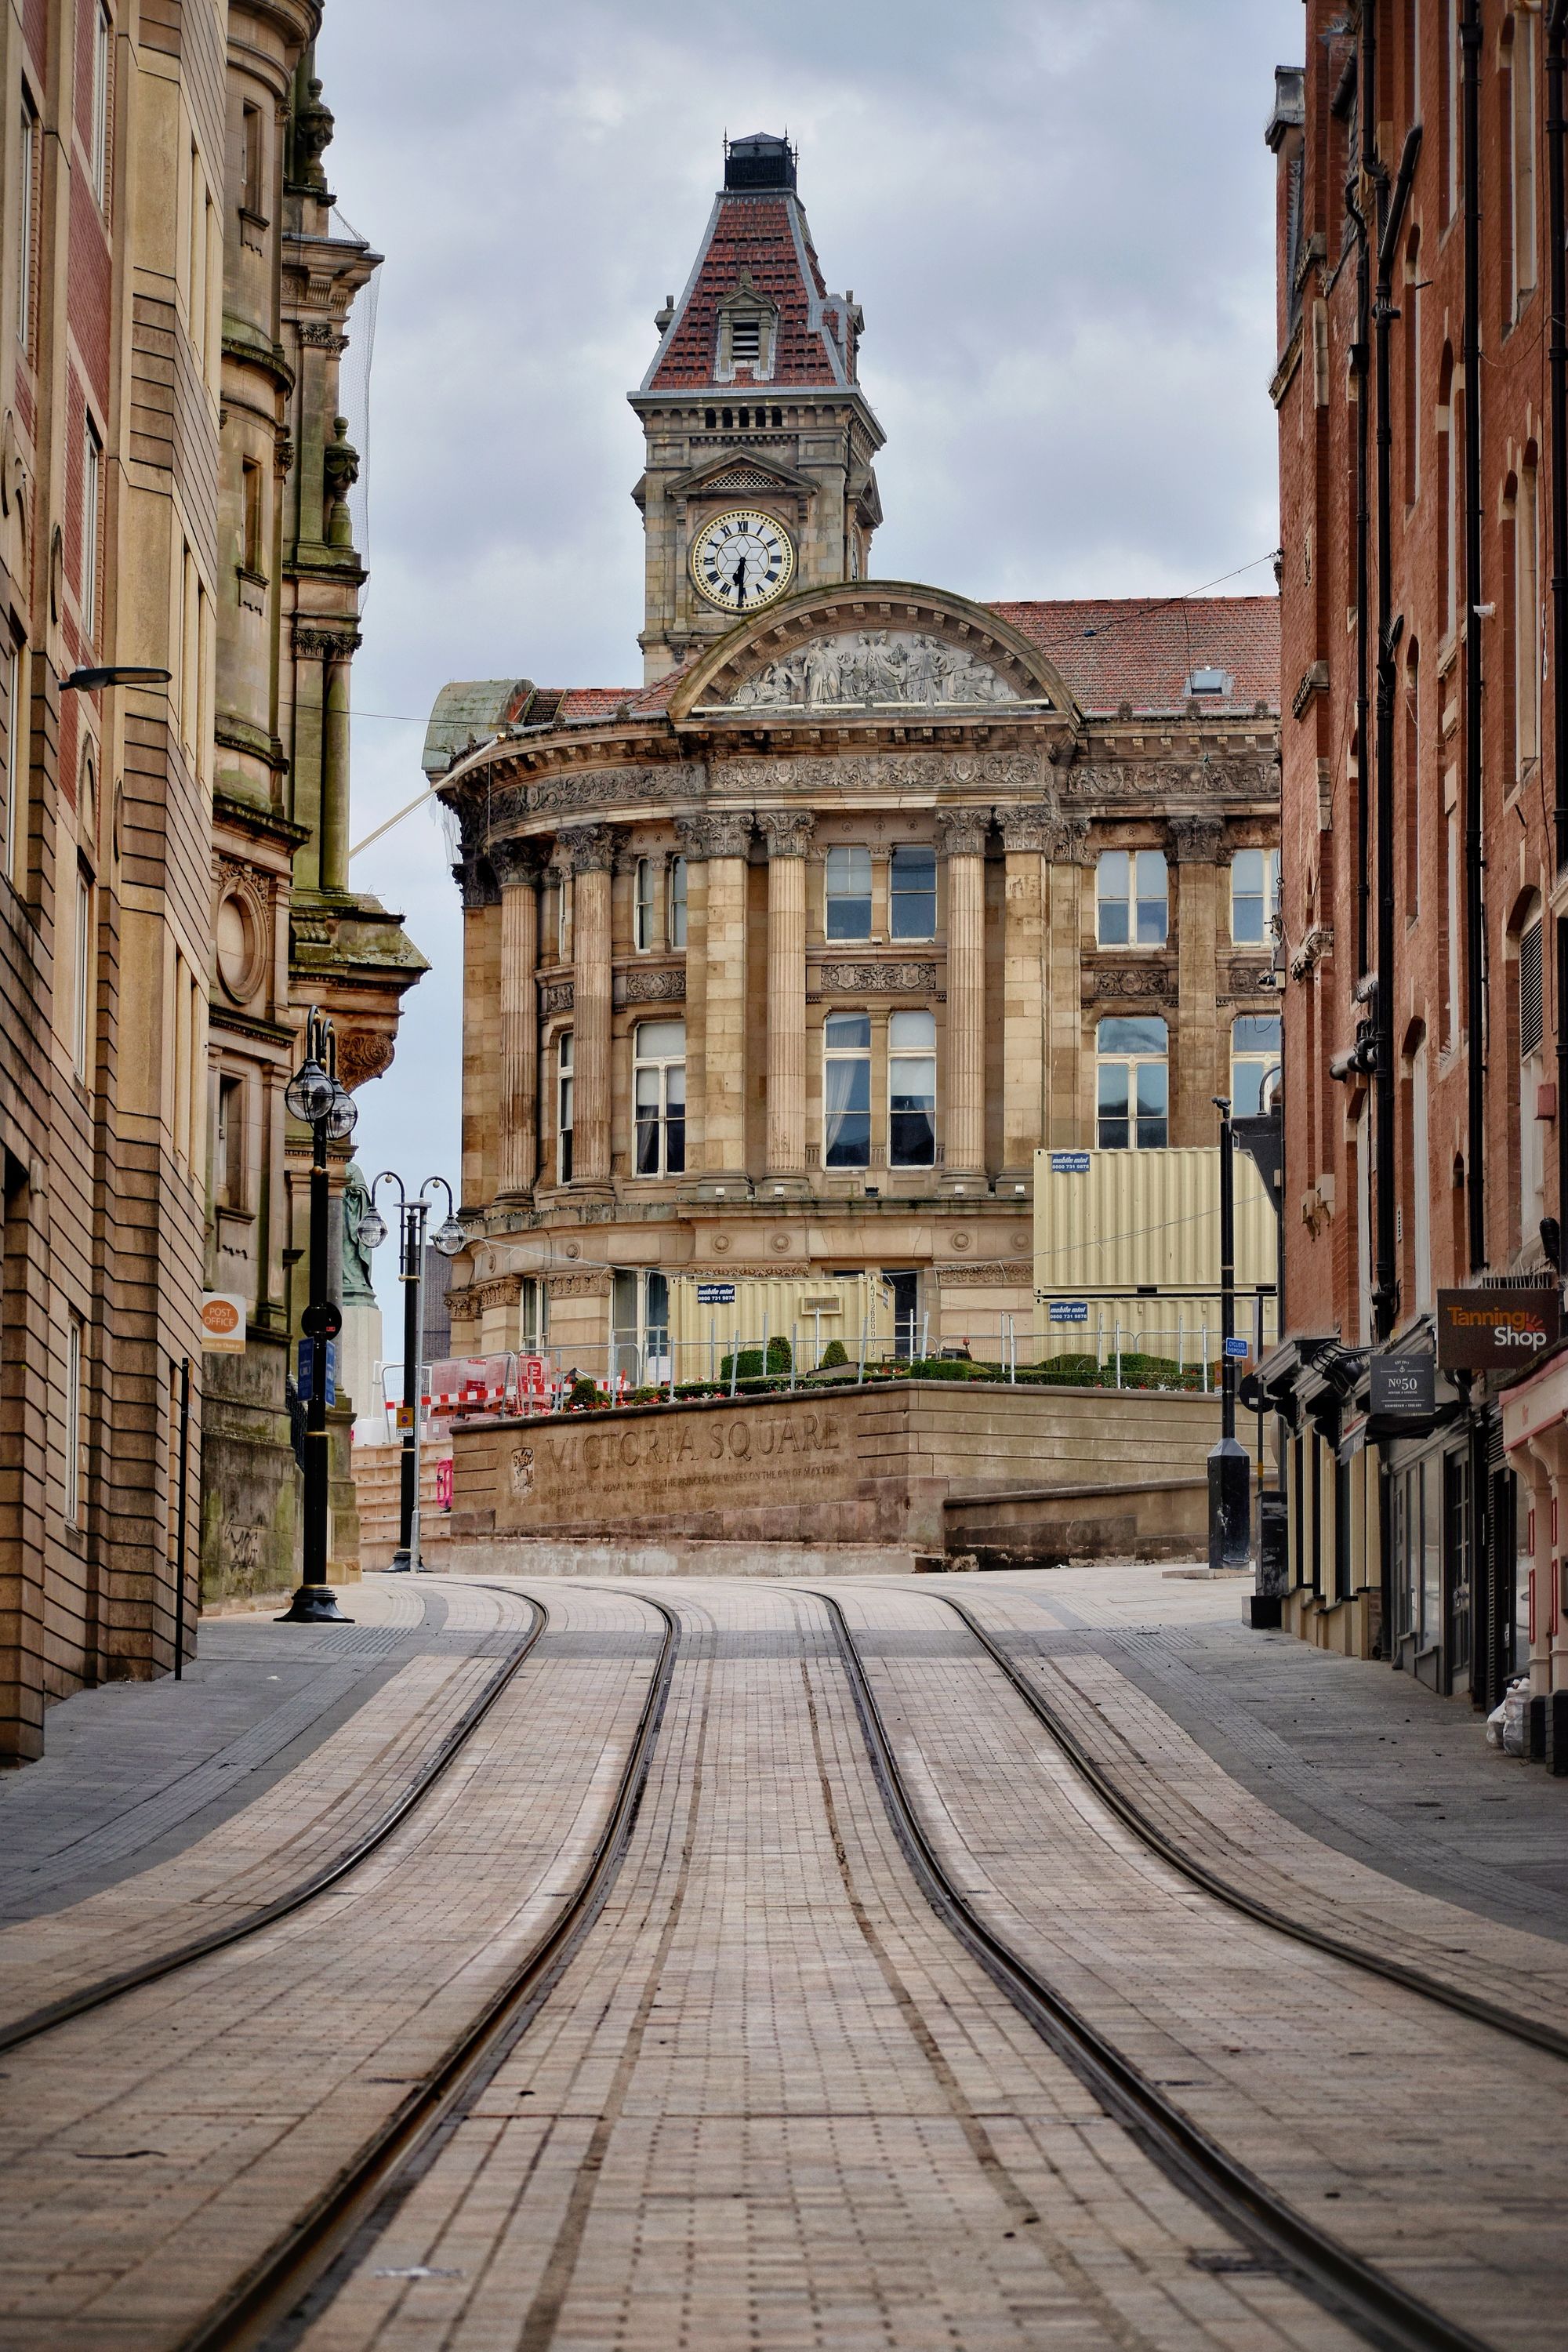 "Second City" from Richard Vinen Profiles Birmingham Economic and Labour History